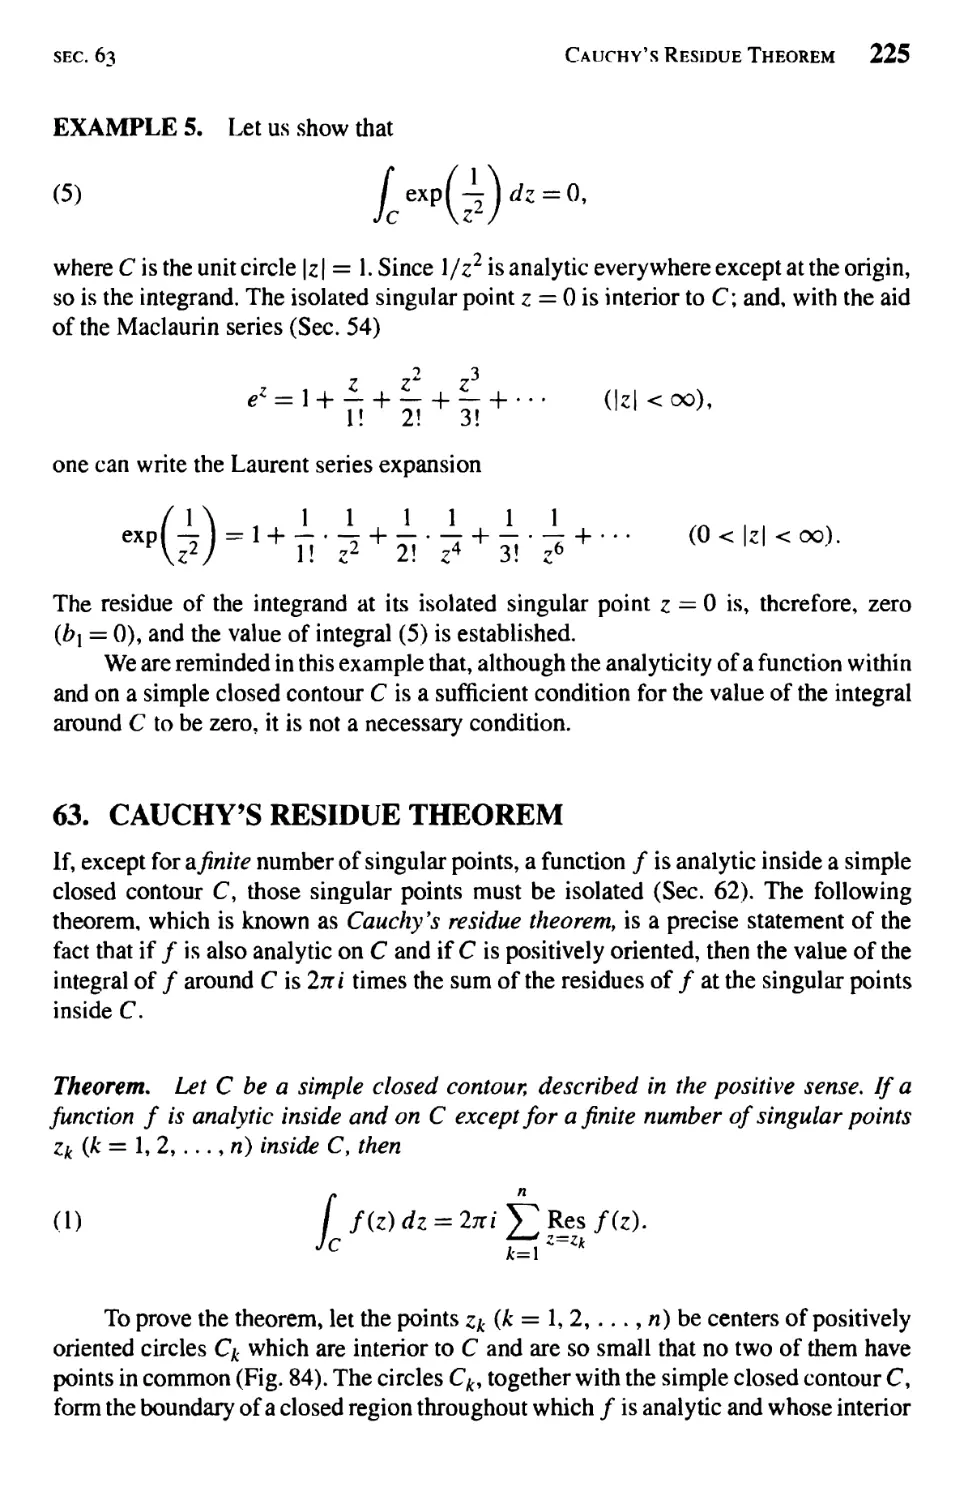 Cauchy's Residue Theorem